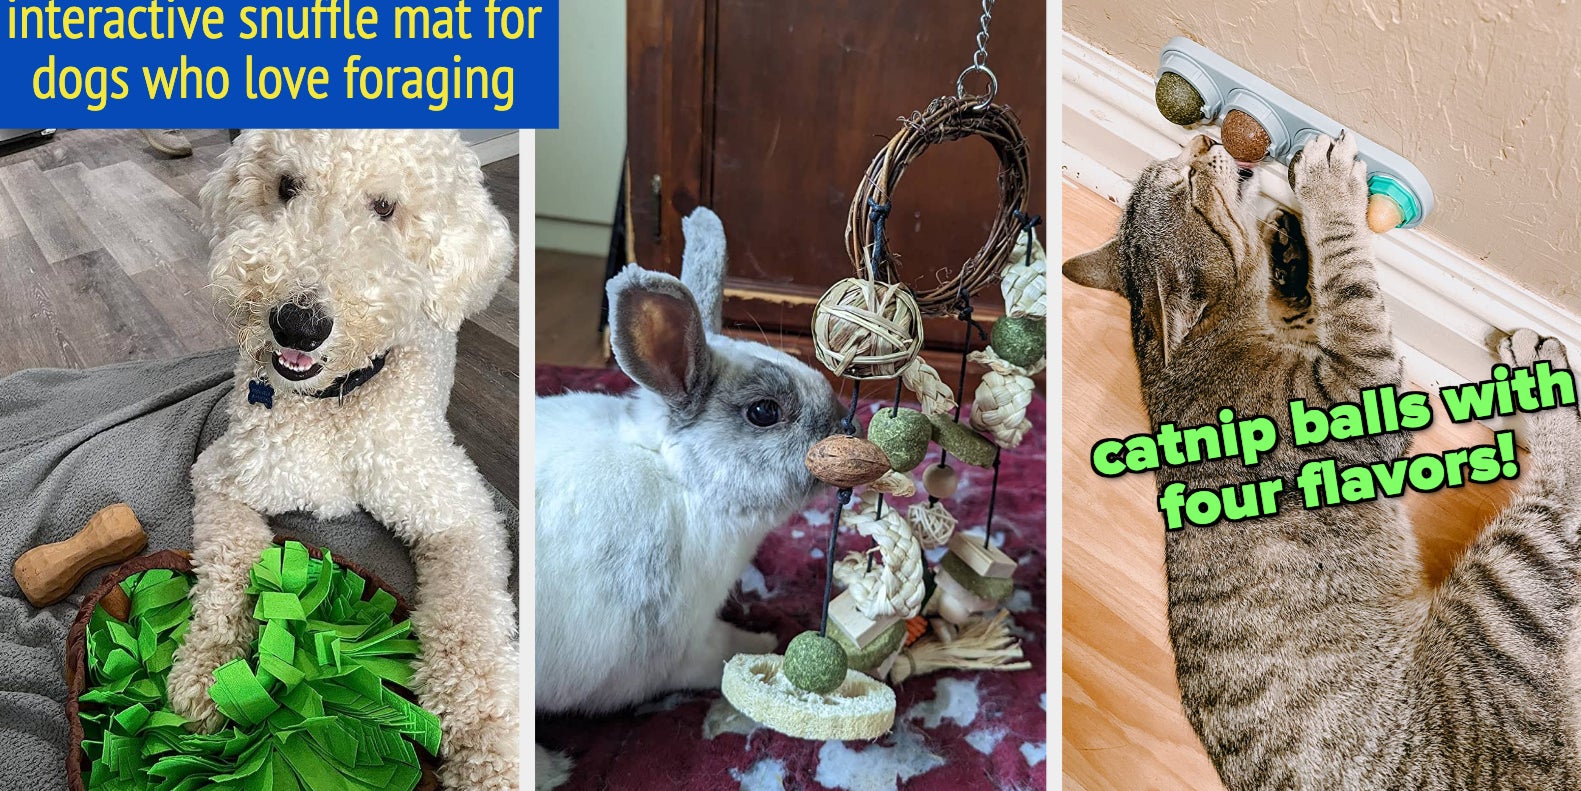 25 Holes Smart Paws Interactive Pet Puzzle Toys, Level 2 Dog Slow Feeder,Dog Puzzle Feeder,Rabbit Toy